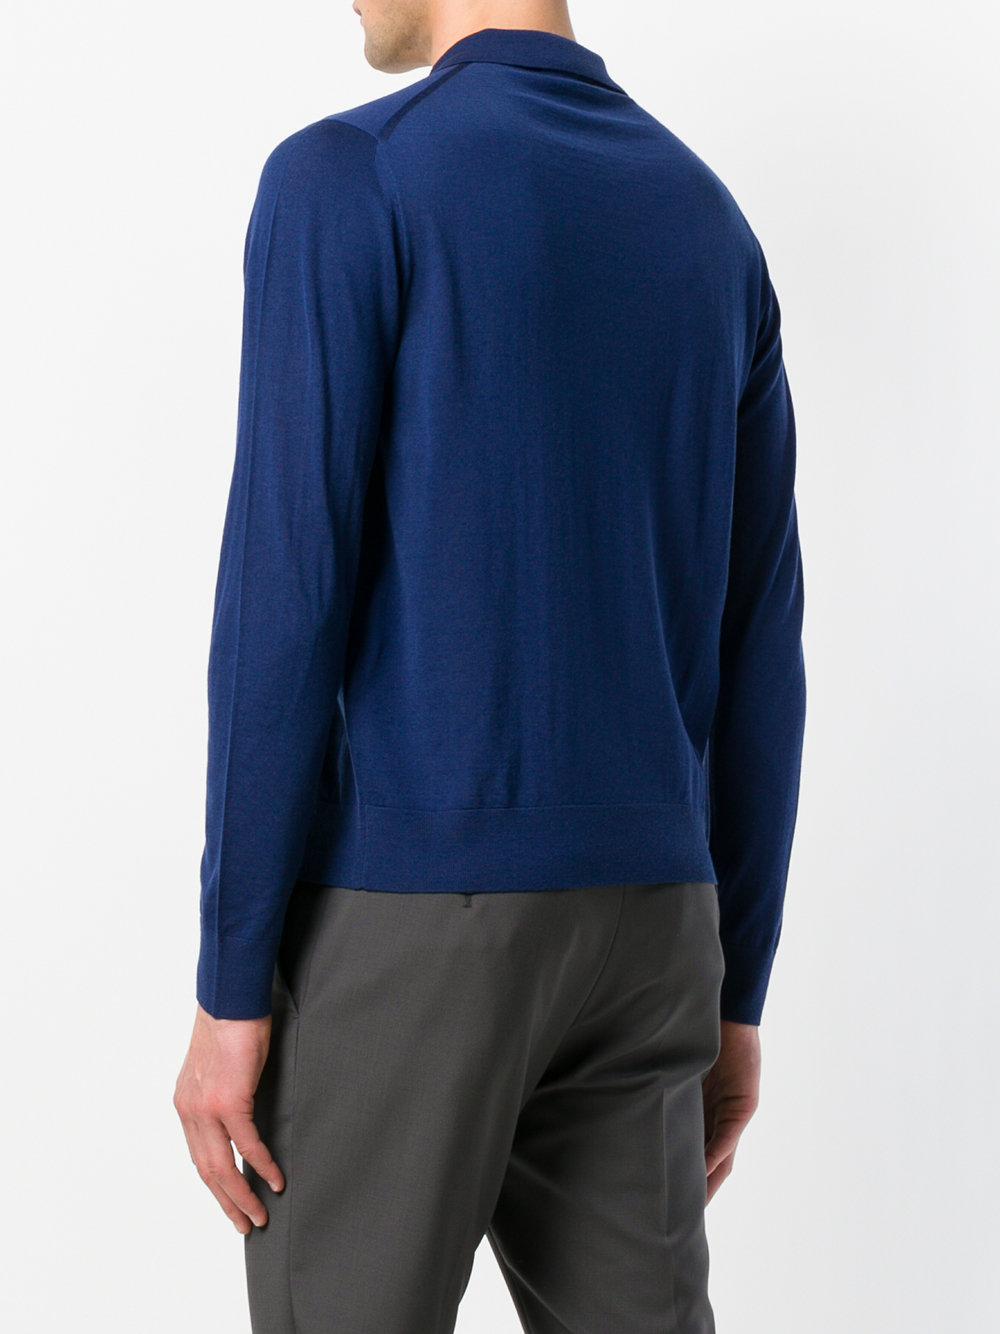 Prada Wool Long Sleeve Polo Shirt in Blue for Men - Lyst